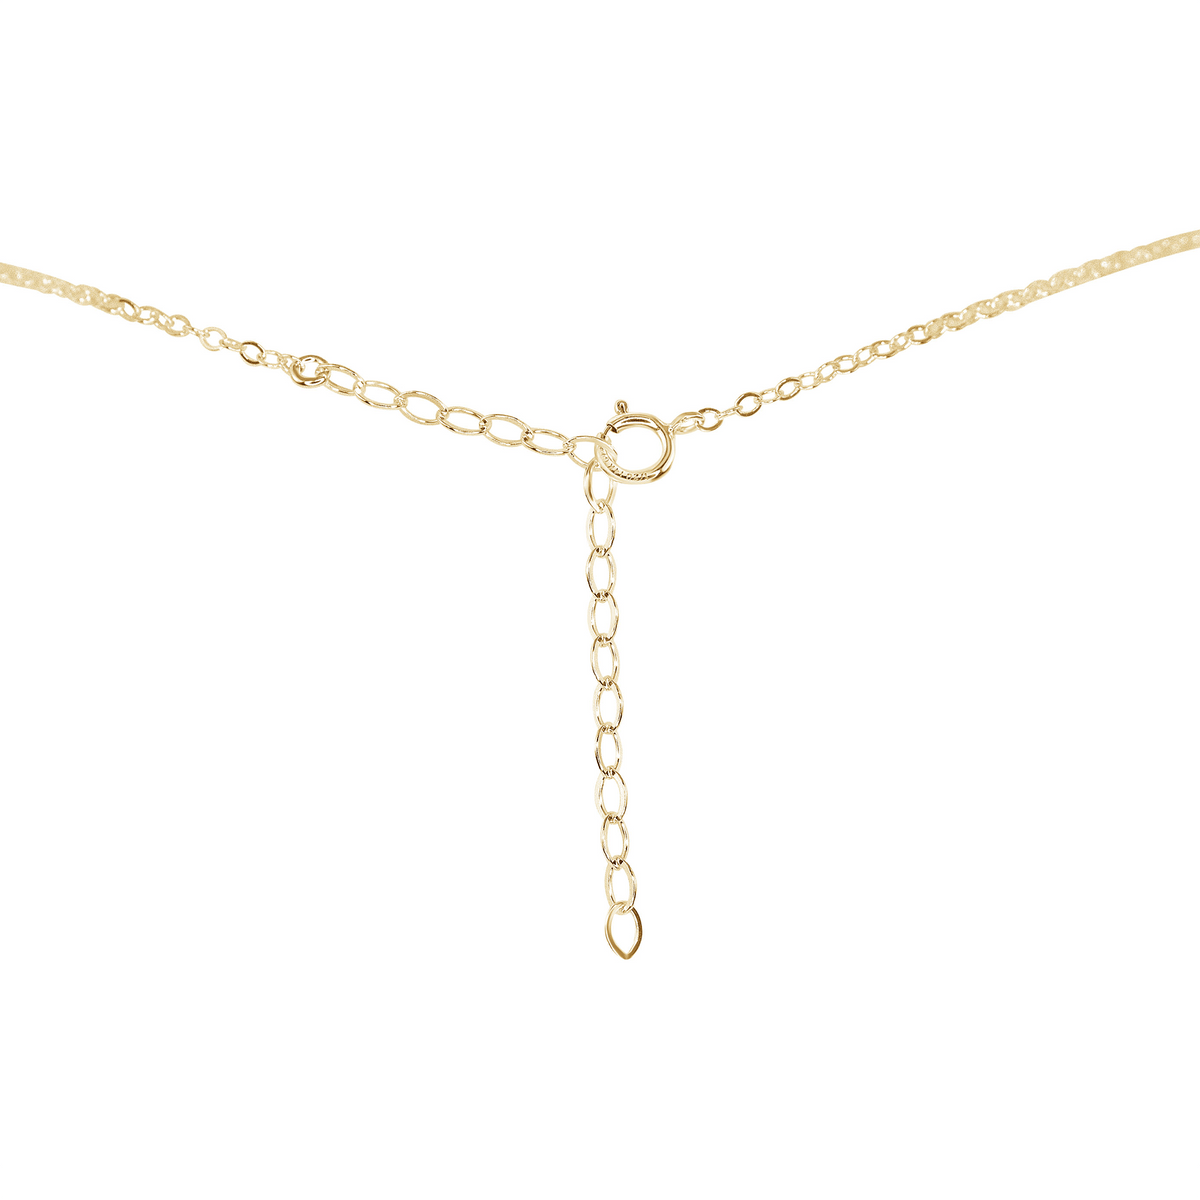 Tiny Raw Amethyst Pendant Necklace - Tiny Raw Amethyst Pendant Necklace - Sterling Silver / Cable - Luna Tide Handmade Crystal Jewellery